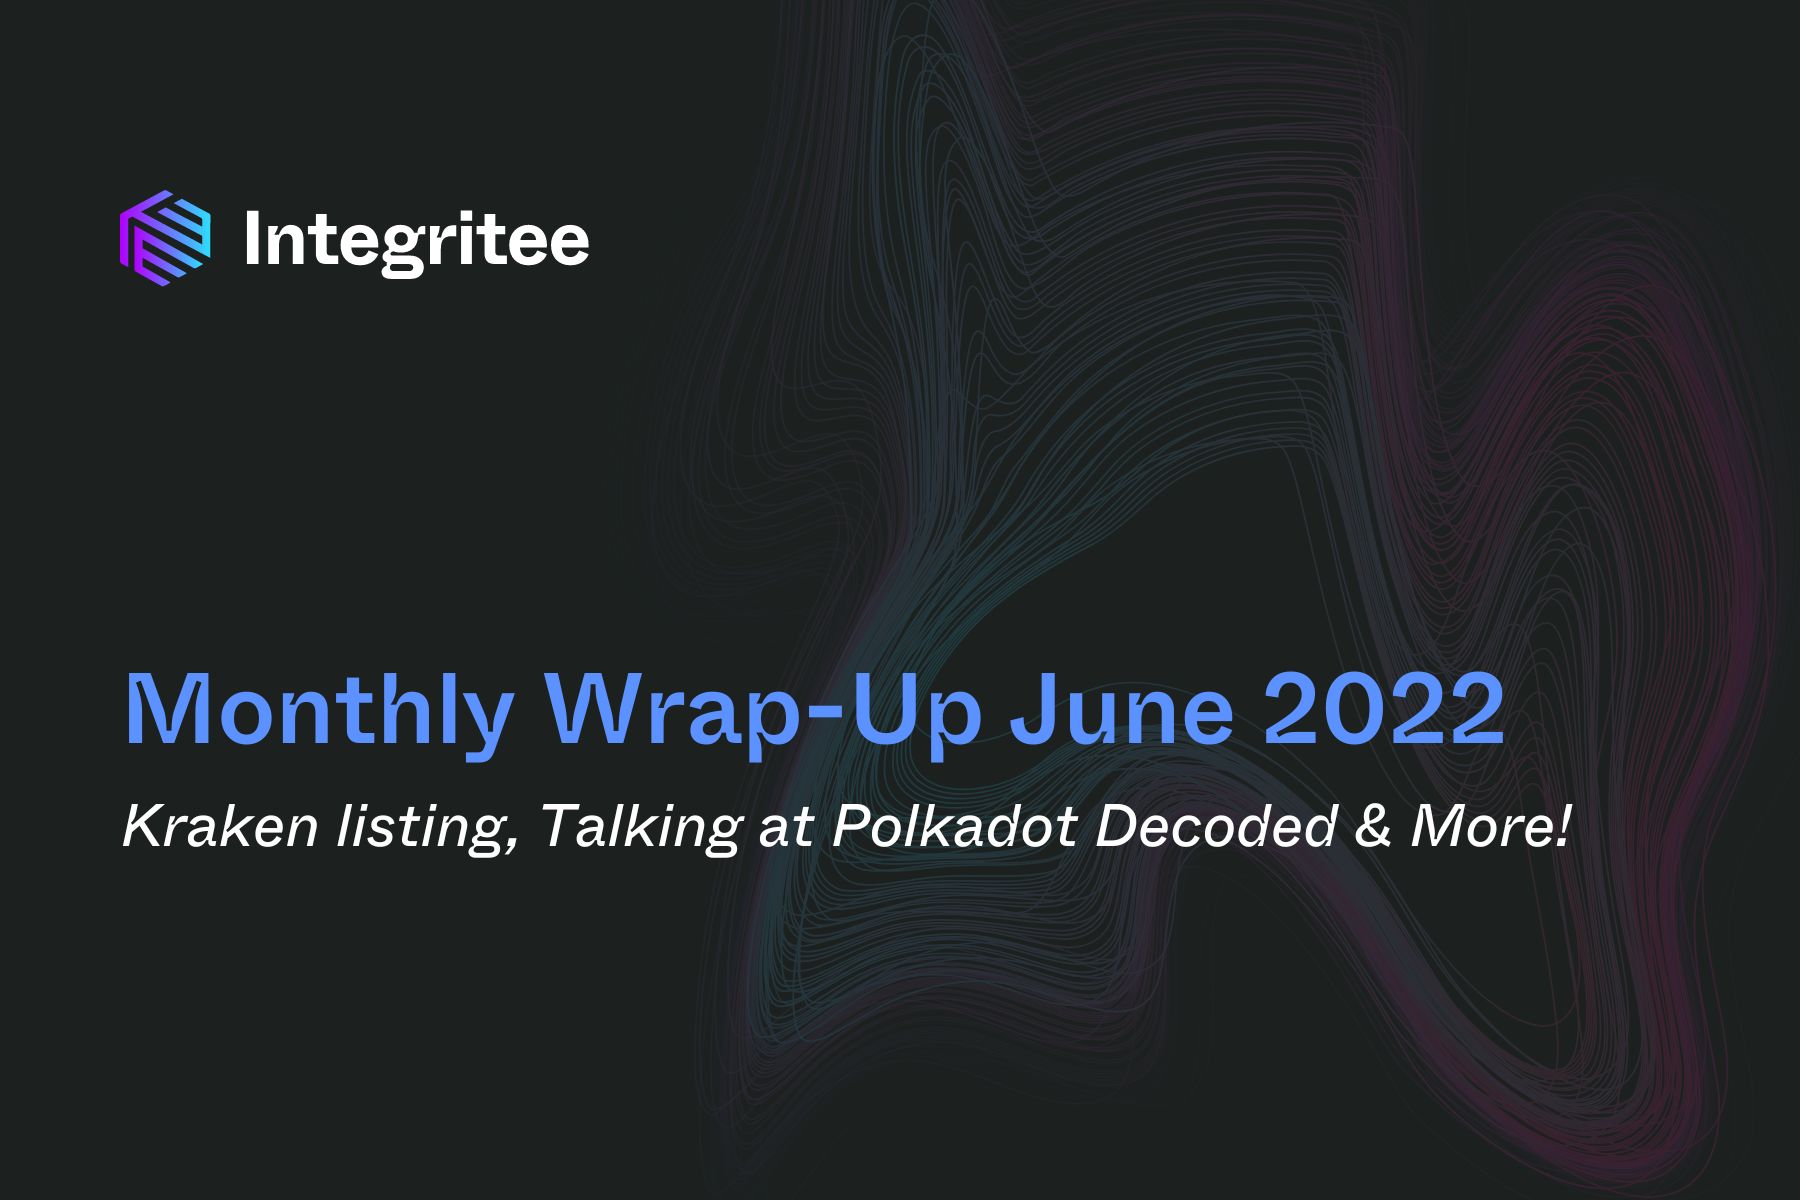 Monthly Wrap-Up June 2022: Kraken listing, Talking at Polkadot Decoded & More!